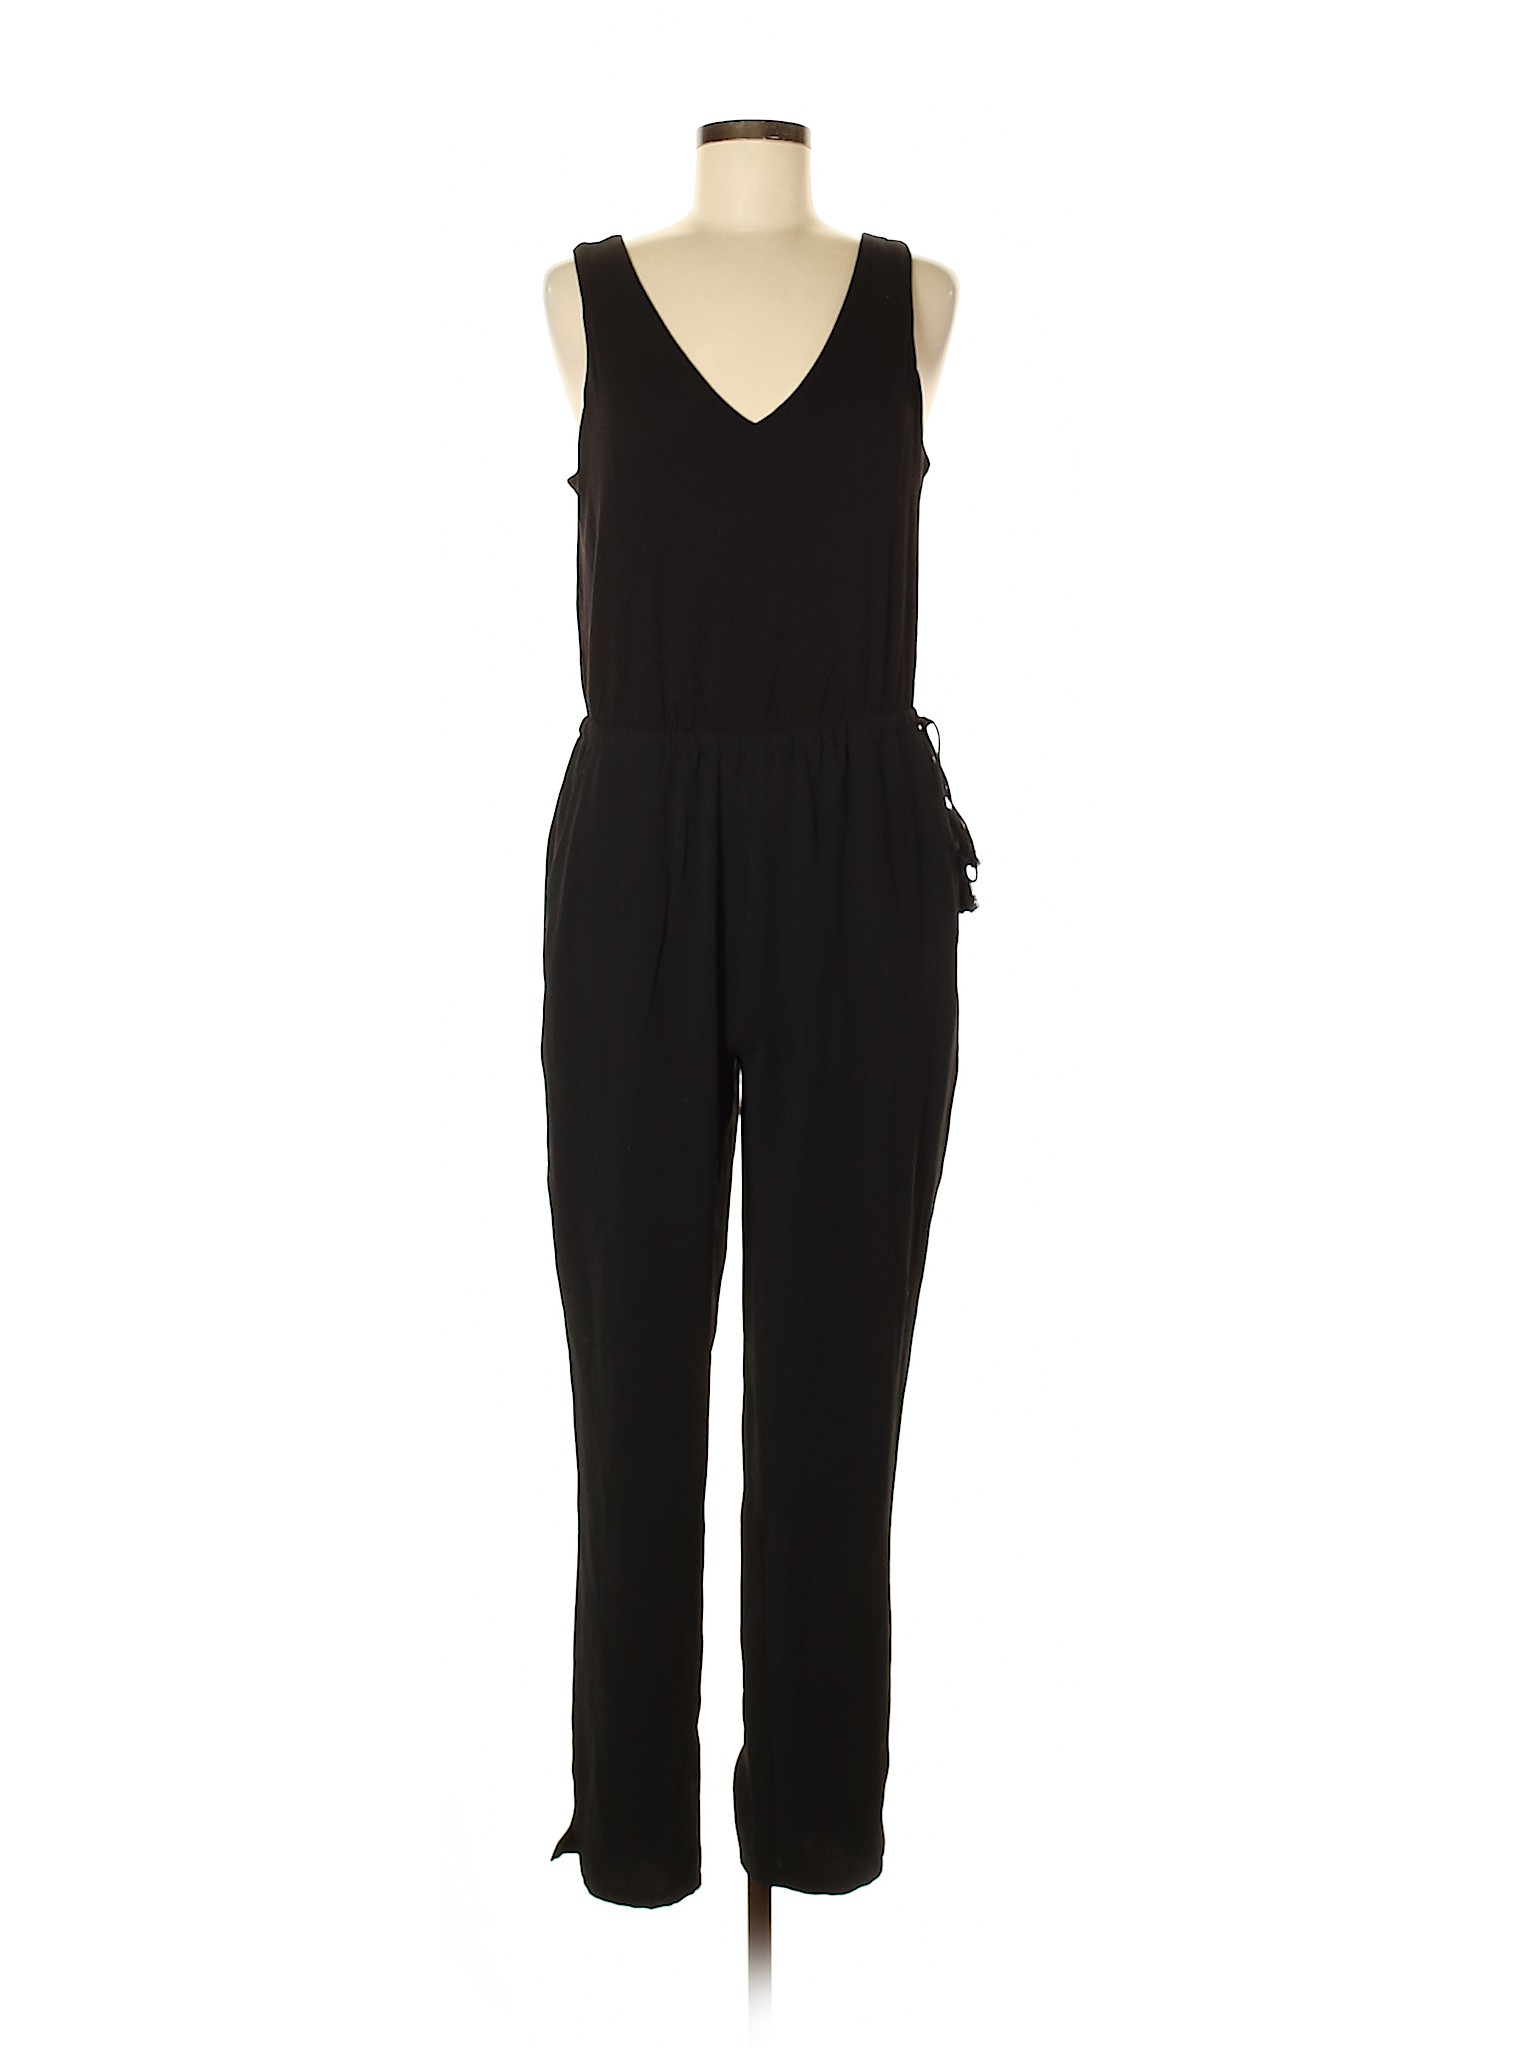 Ann Taylor LOFT Solid Black Jumpsuit Size 4 - 56% off | thredUP